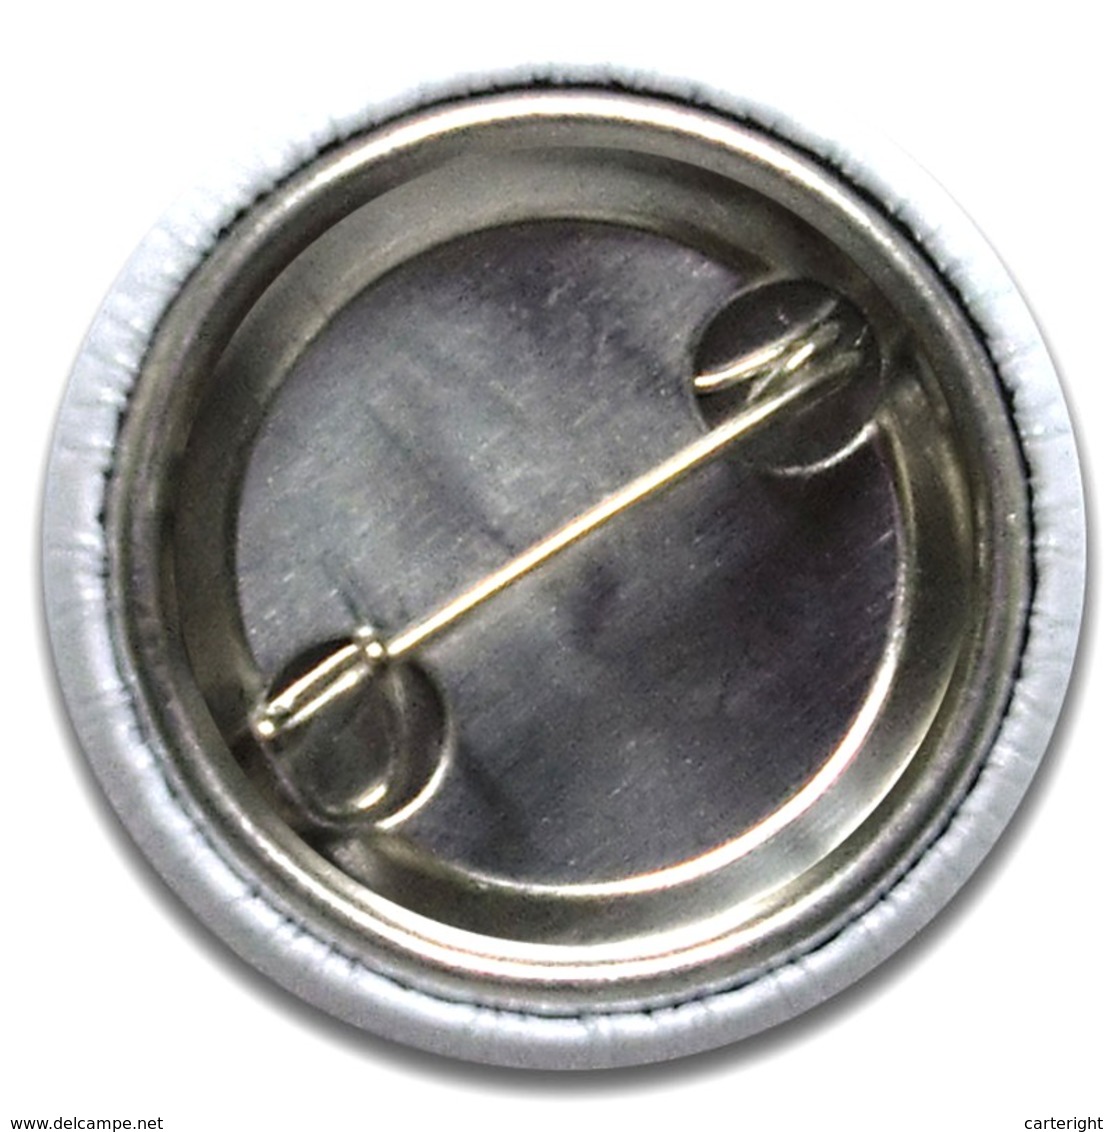 James Dean movie film fan ART BADGE BUTTON PIN SET 2 (1inch/25mm diameter) 35 DIFF